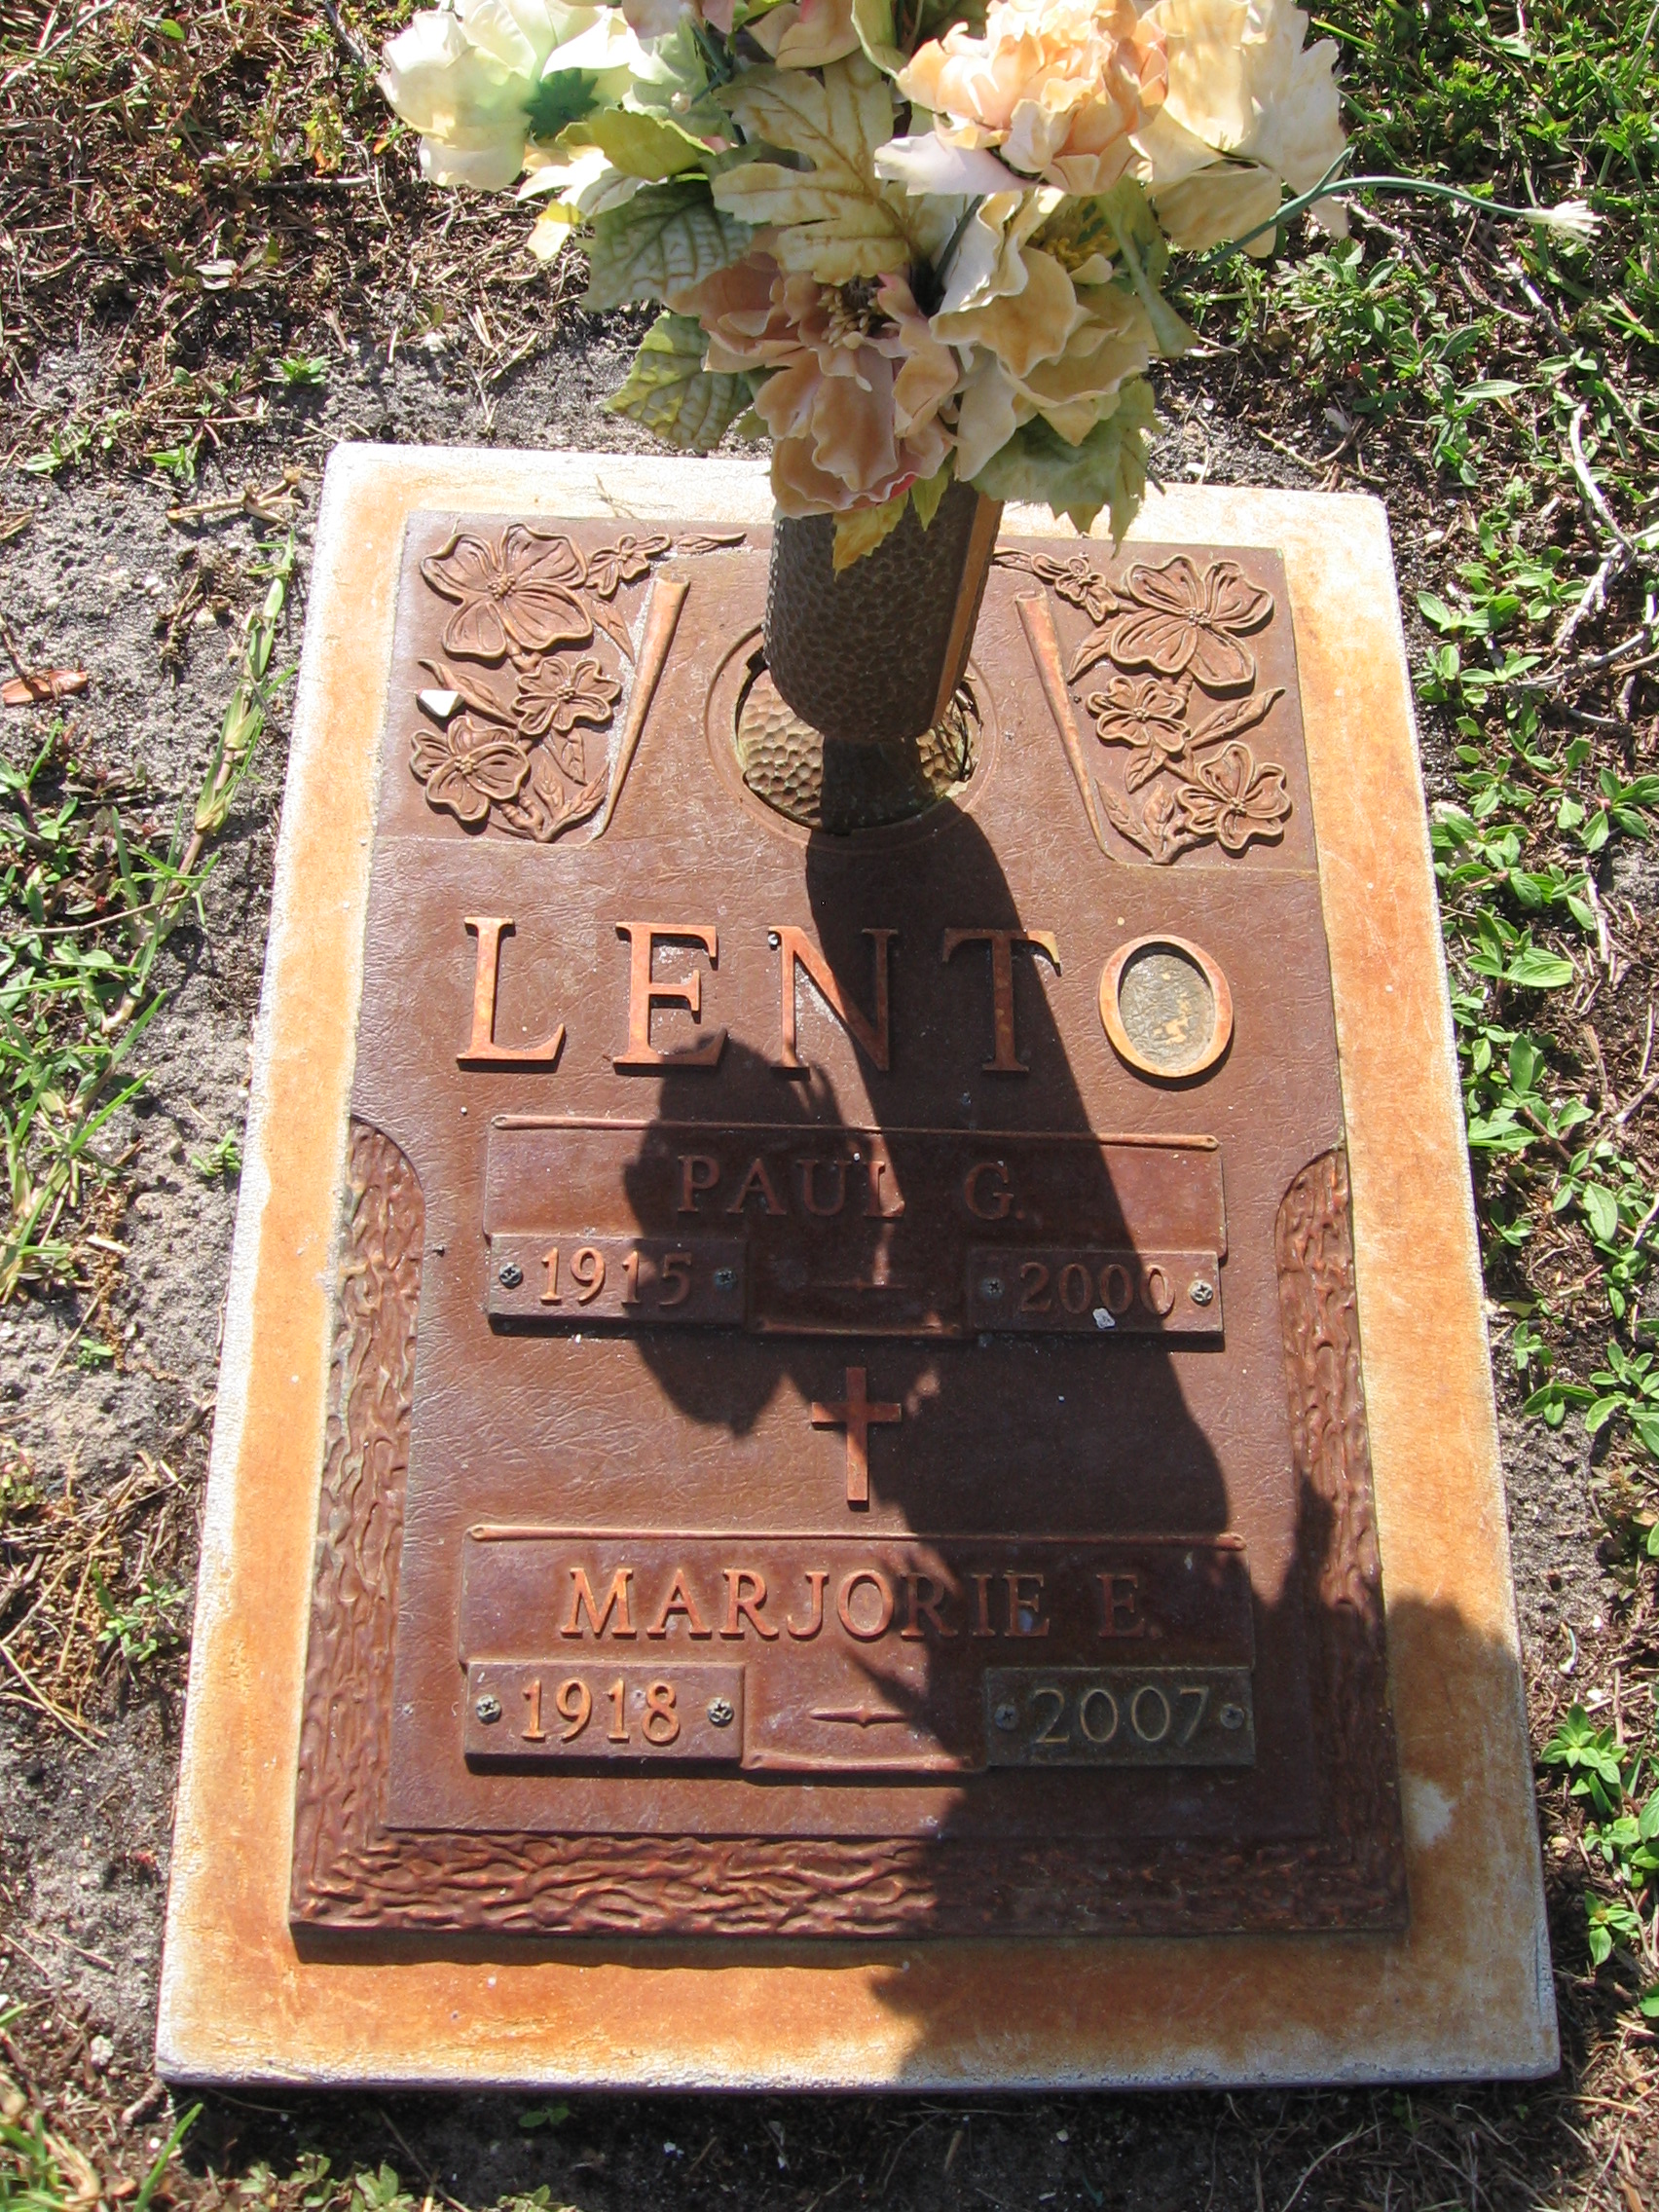 Marjorie E Lento